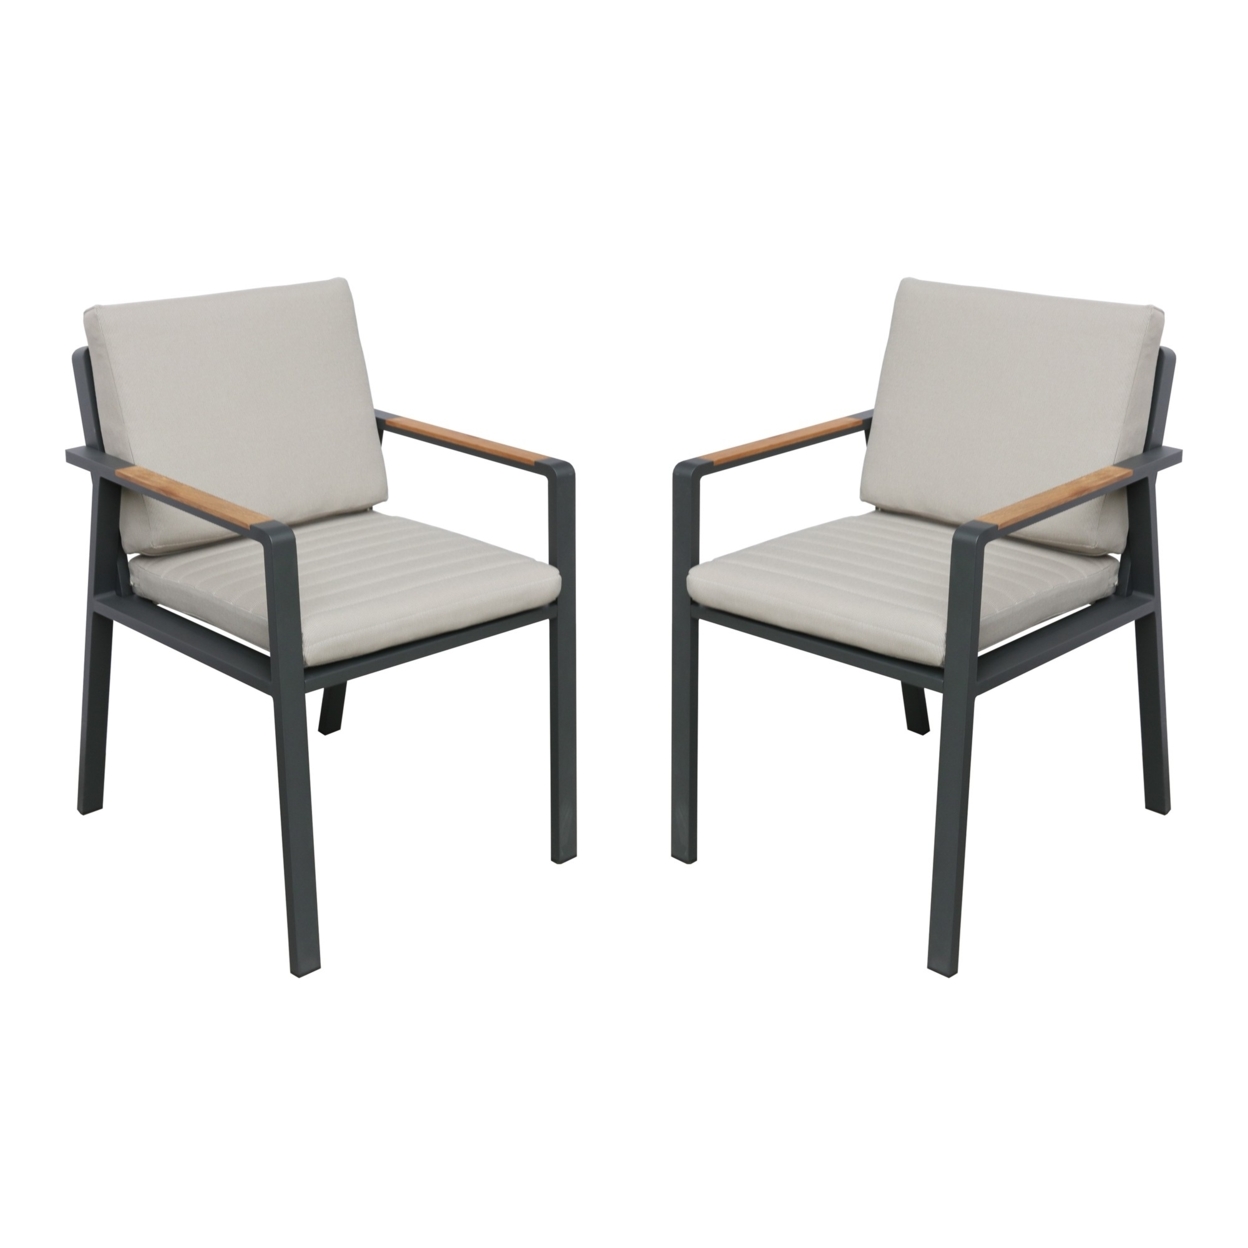 19 Inches Olefin Upholstered Aluminum Dining Chair, Set Of 2, Gray- Saltoro Sherpi